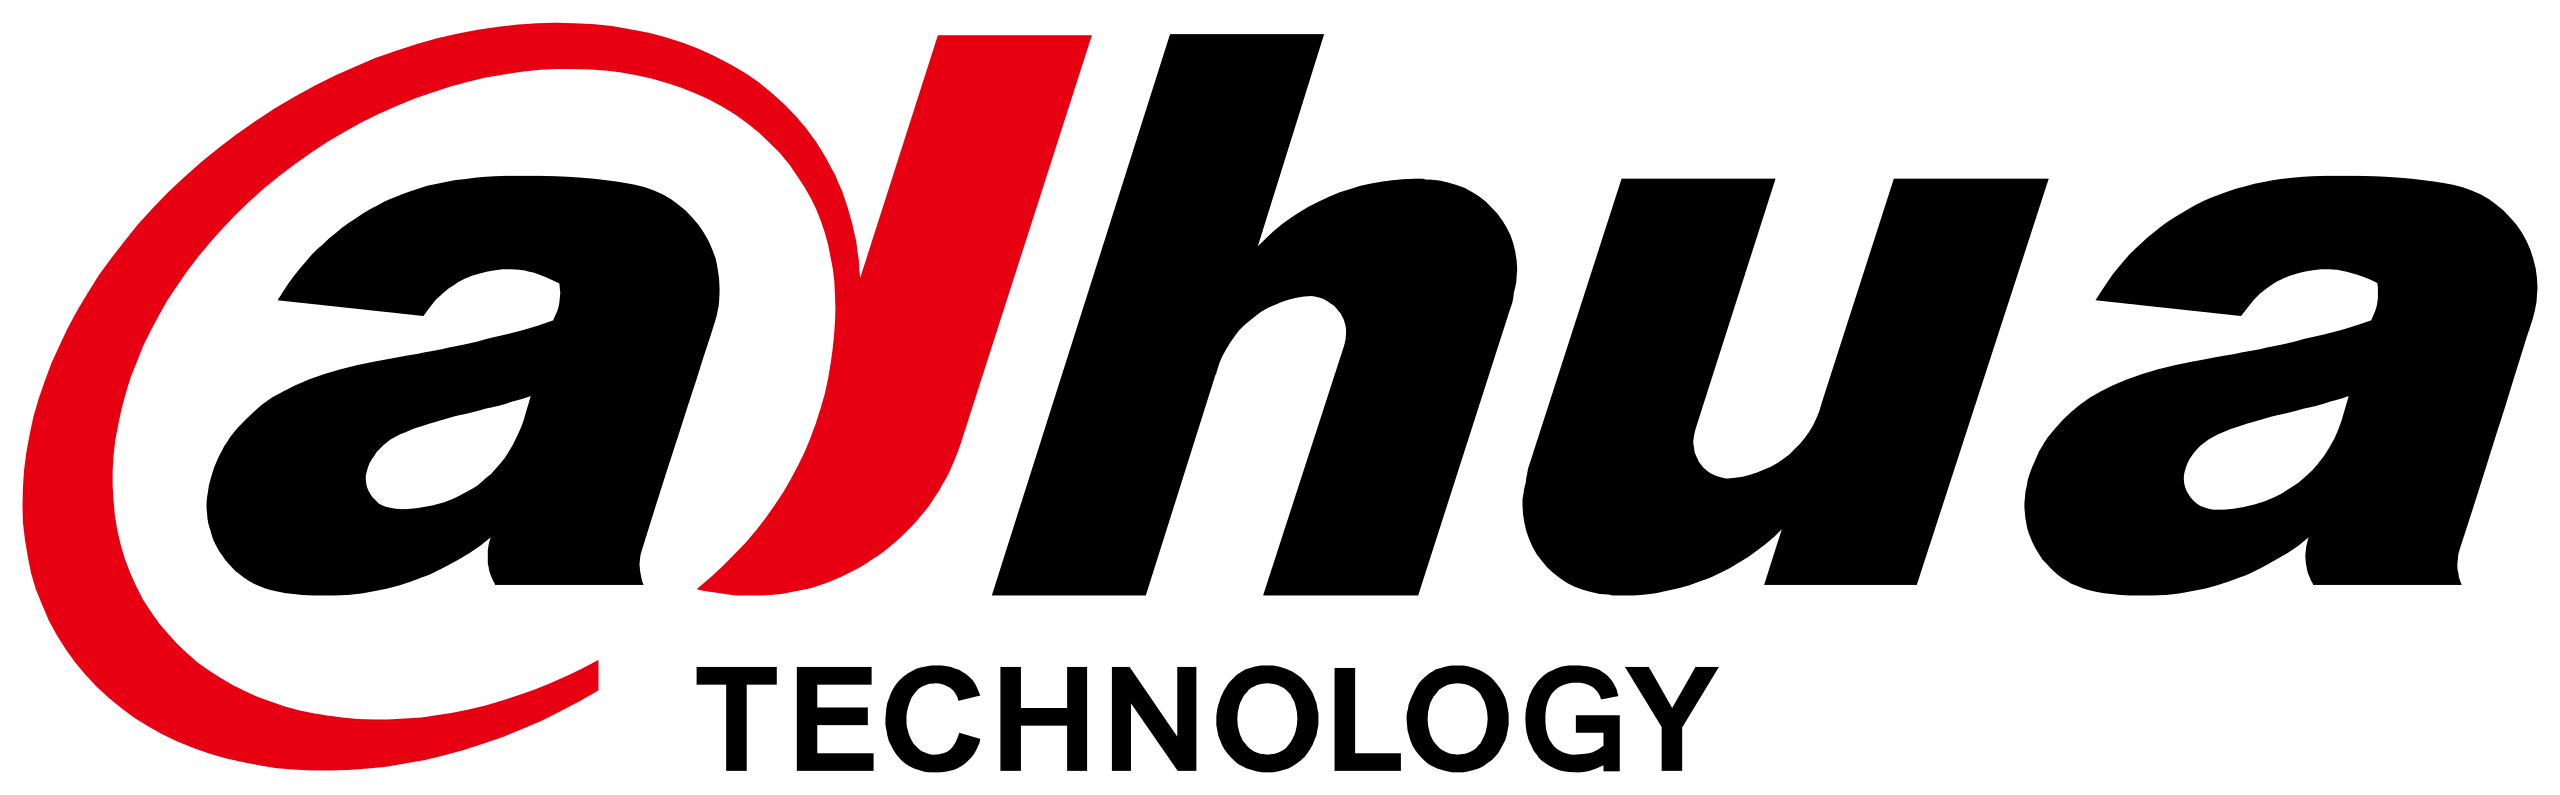 Dahua_Technology_logo.png